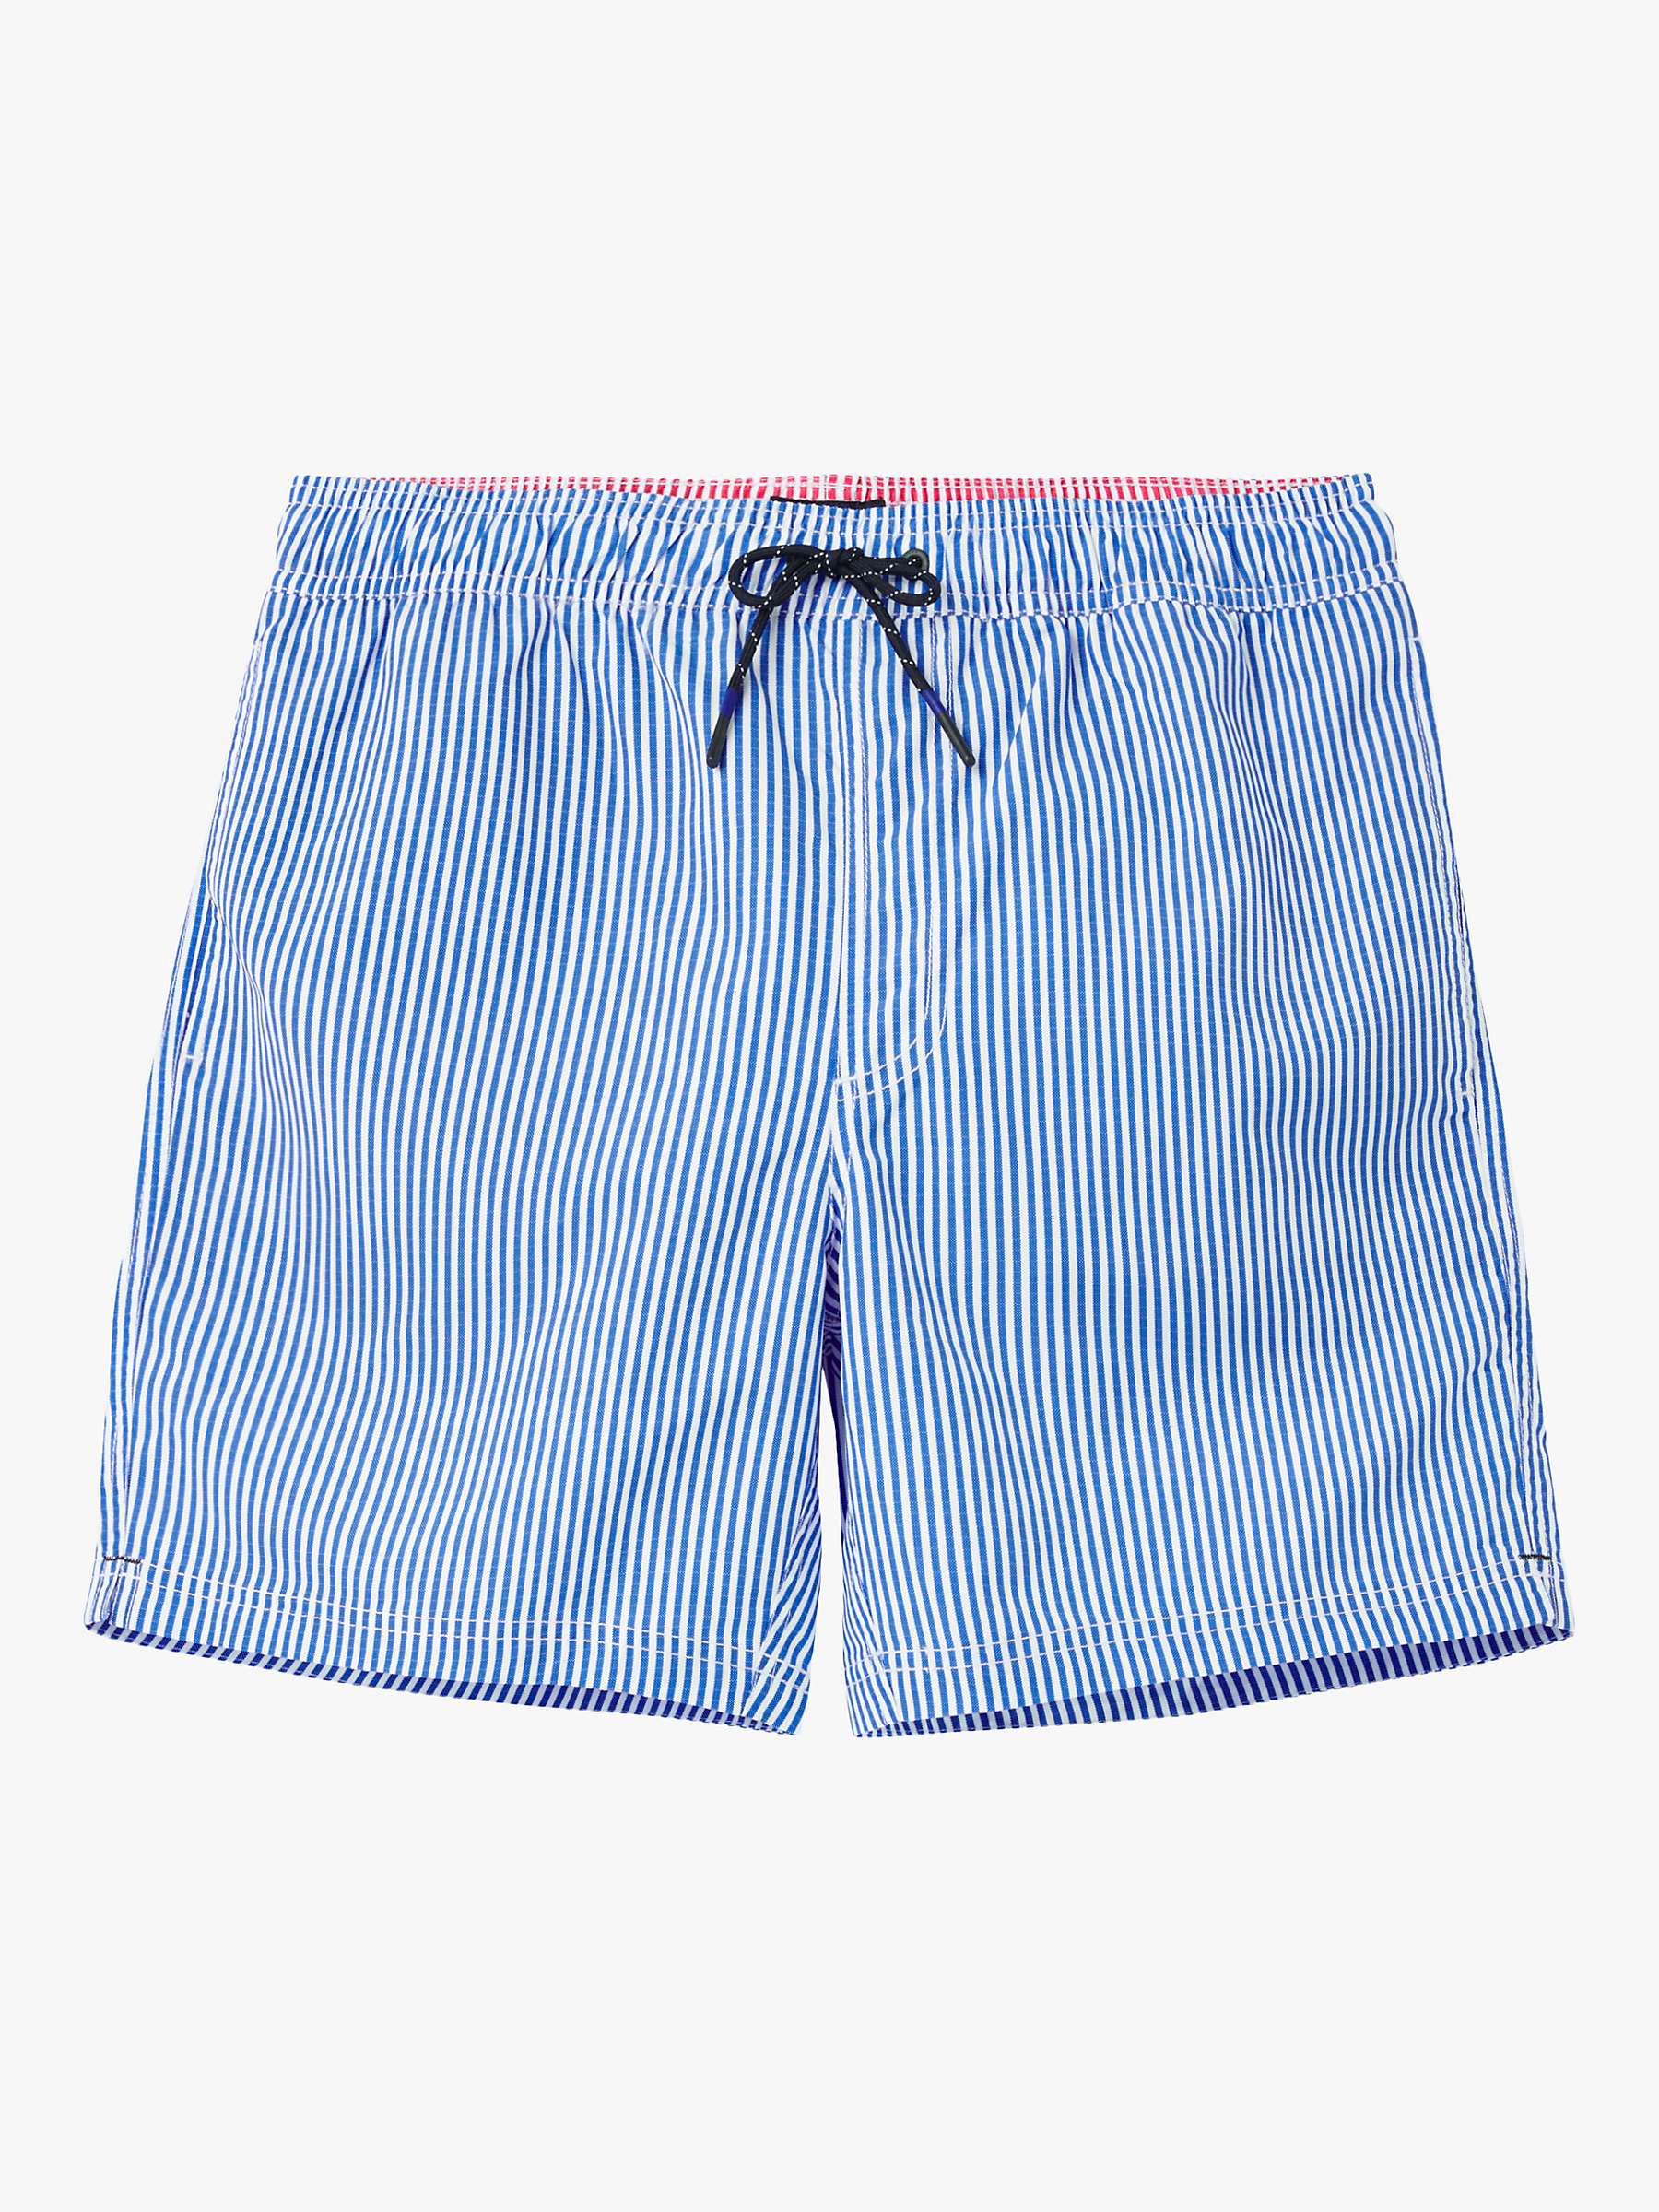 Buy Joules Heston Stripe Swim Shorts, Blue Textured Stripe Online at johnlewis.com